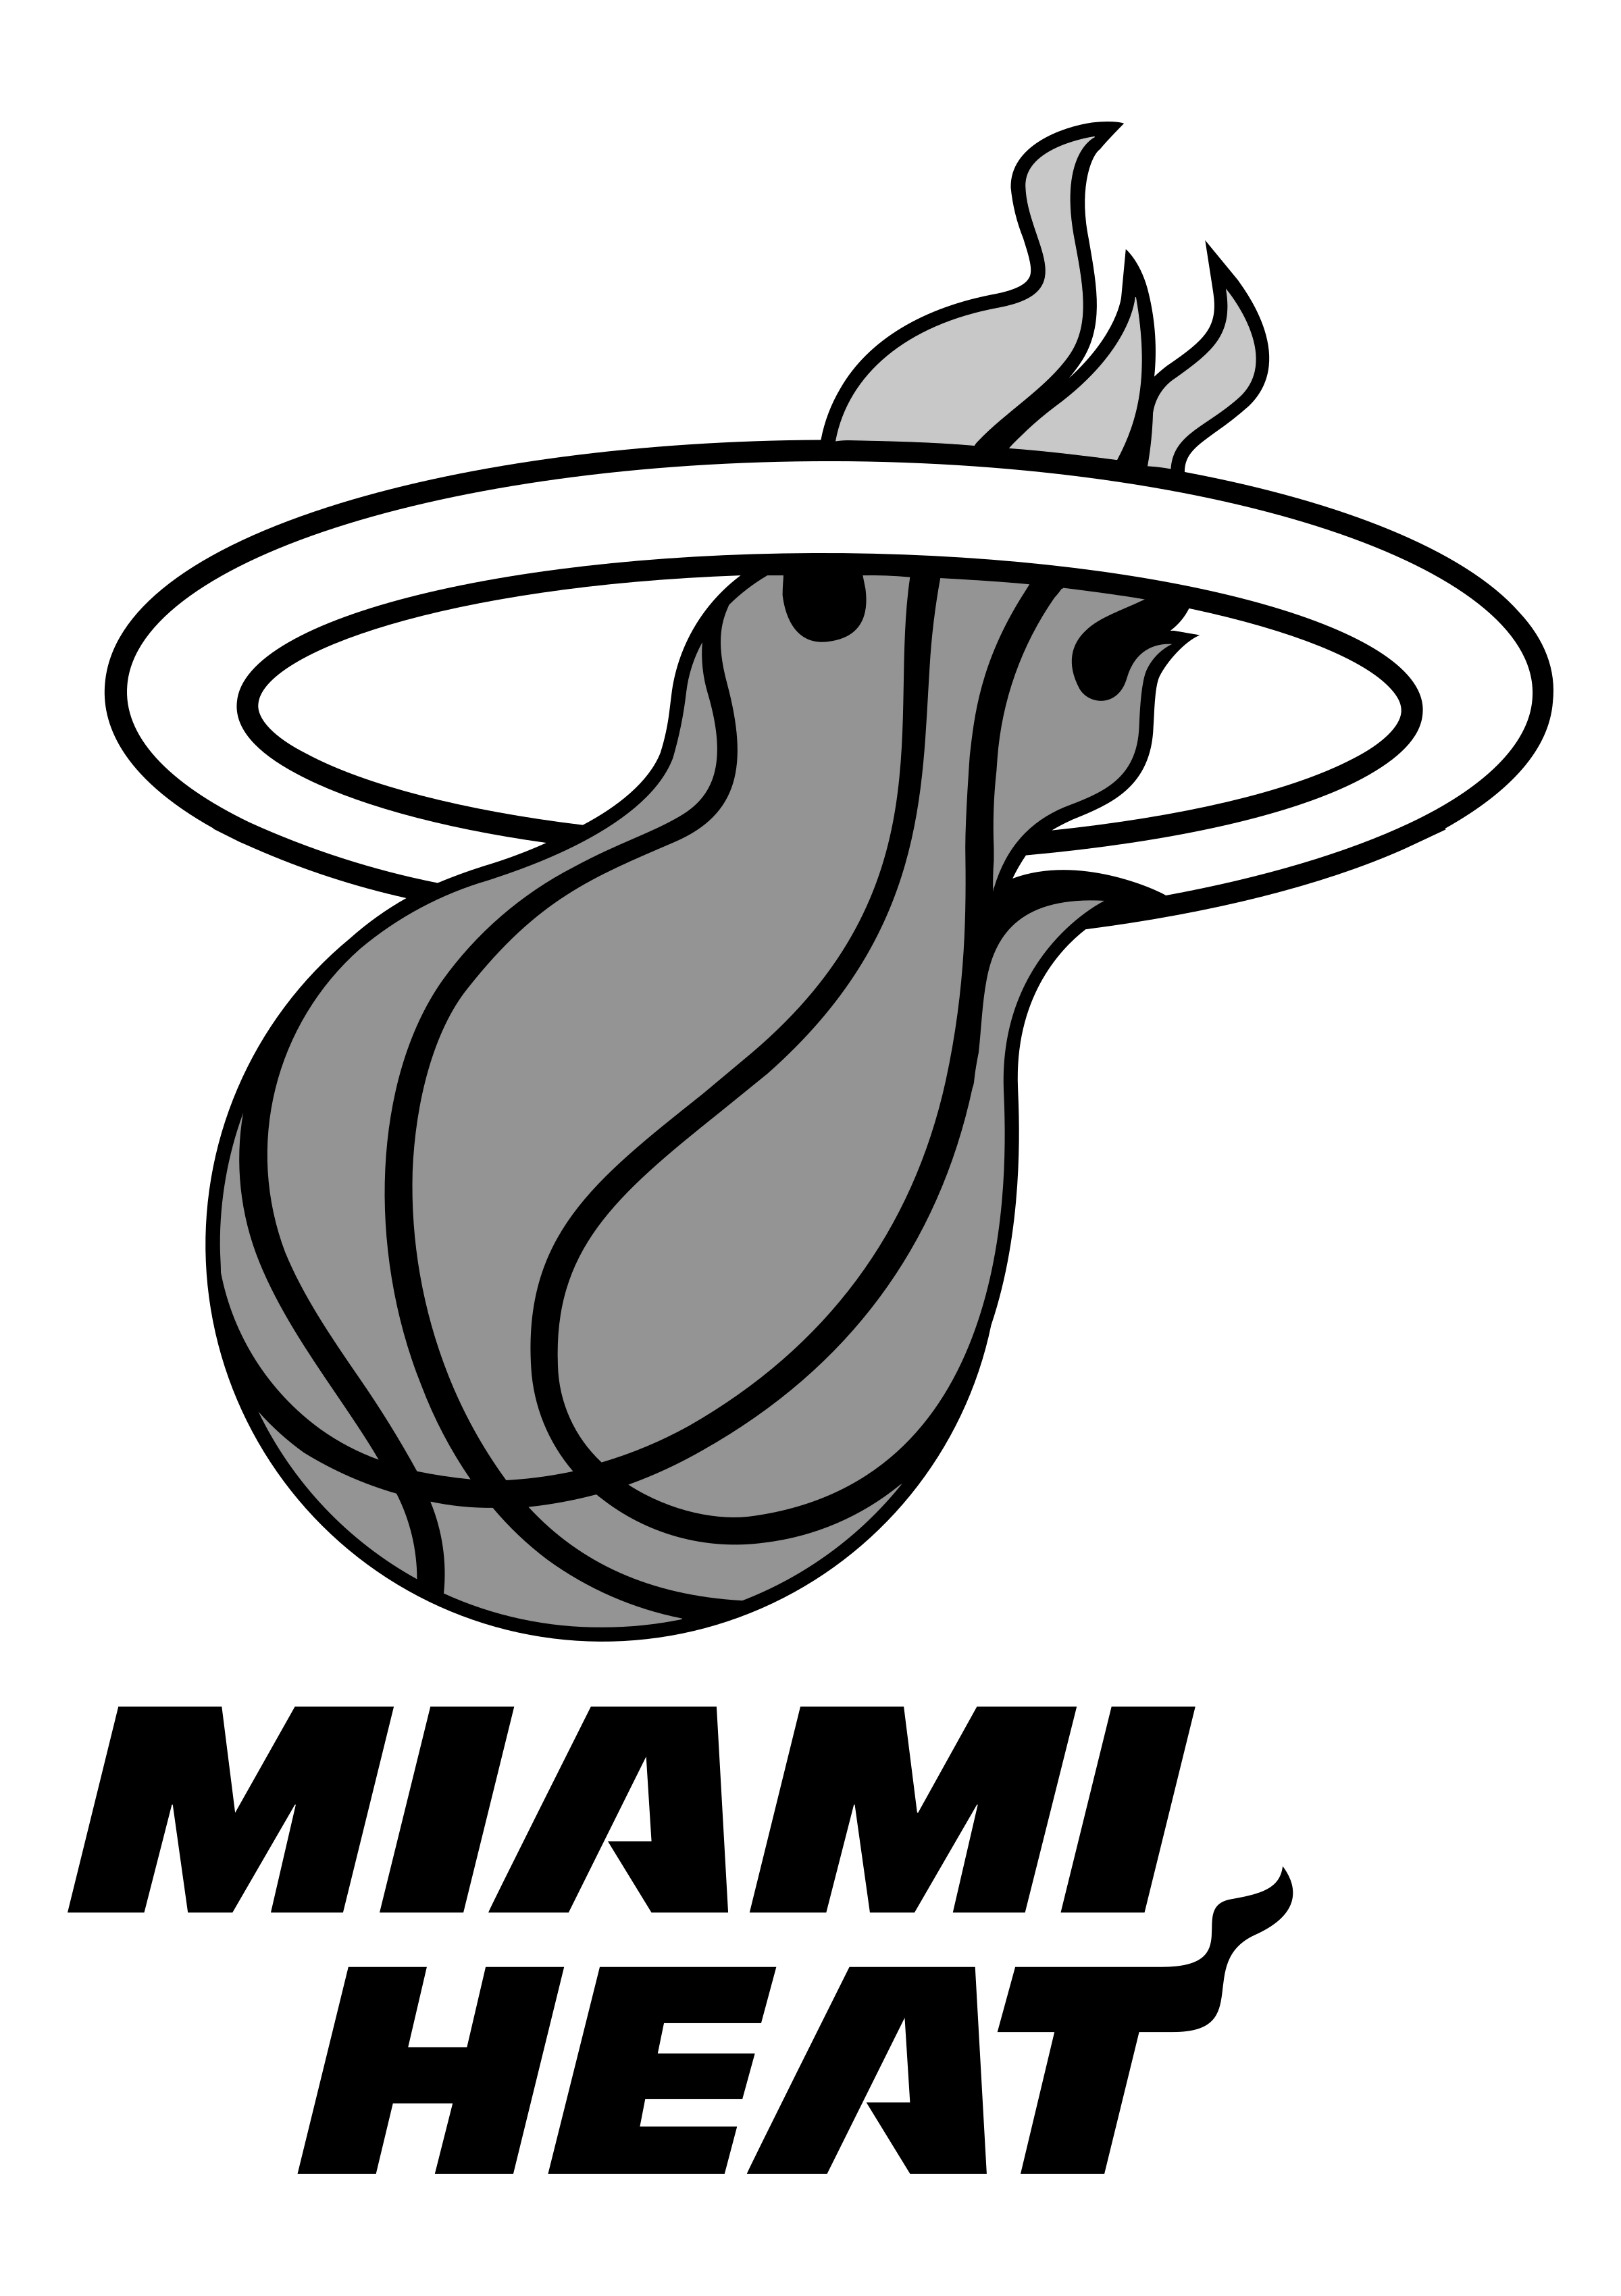 Heat Logo - Miami Heat Logo PNG Transparent & SVG Vector